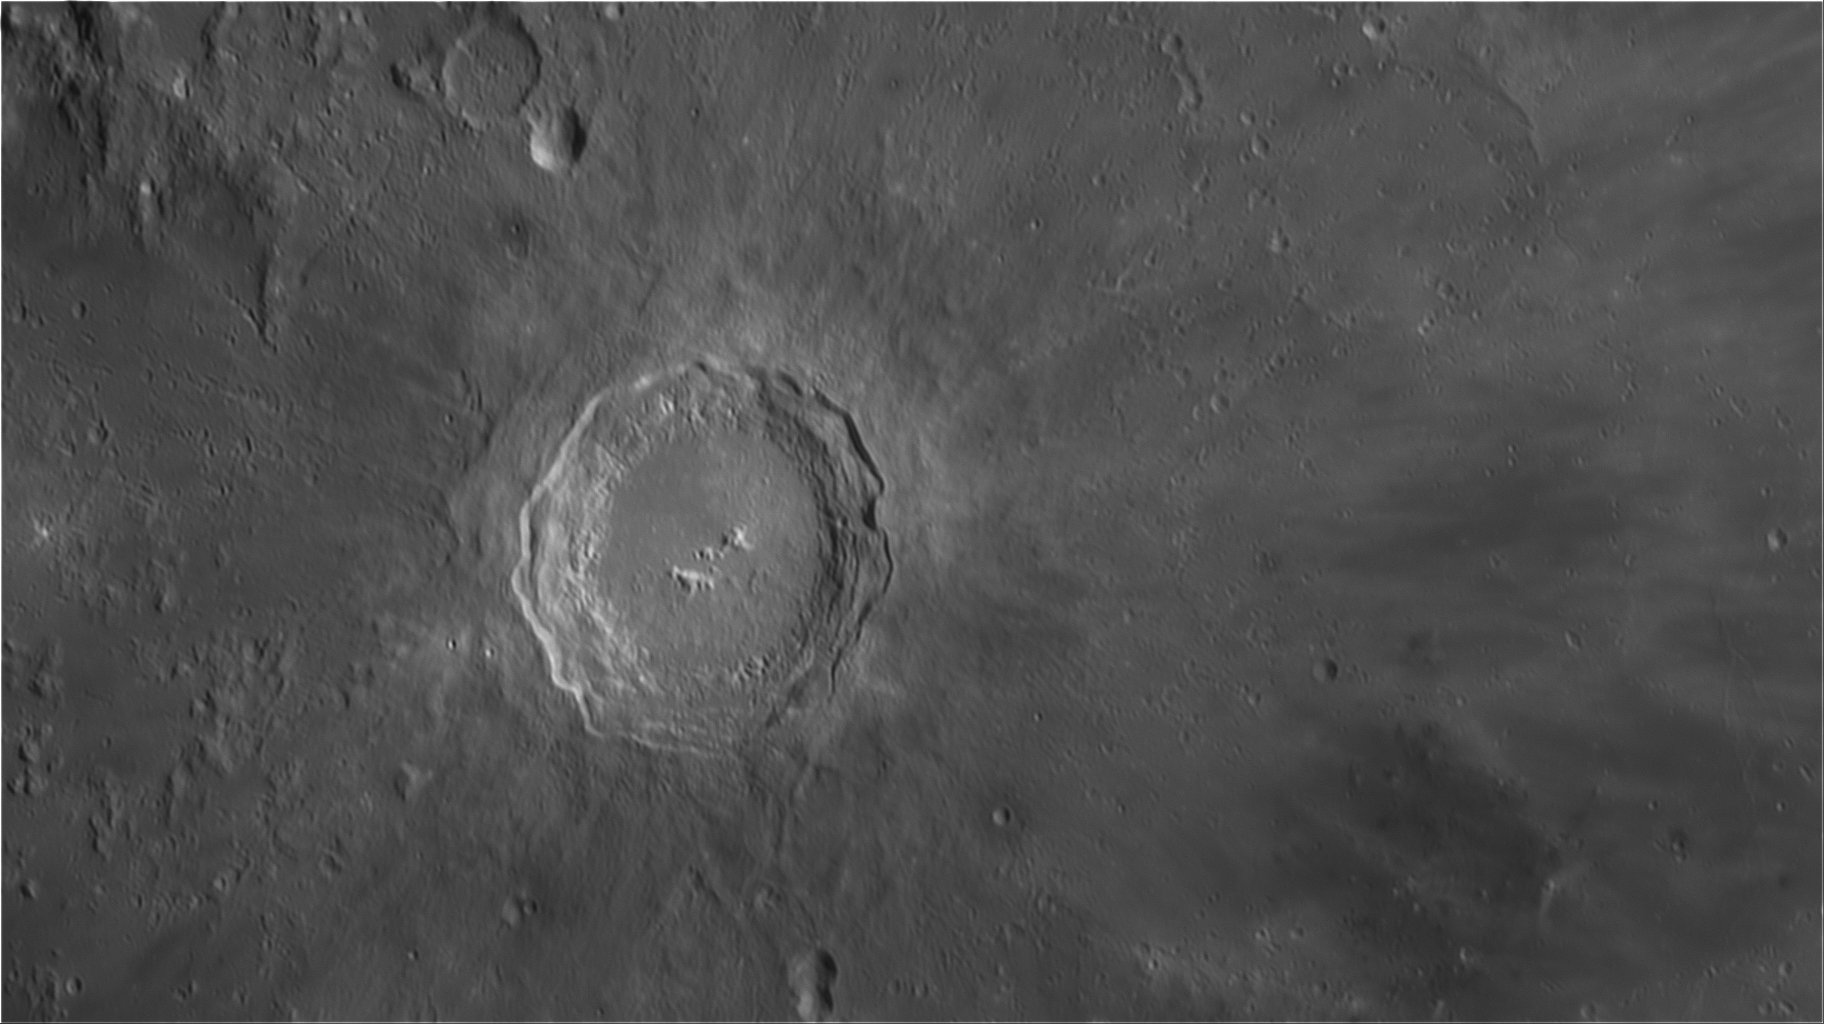 Moon_C11HD_colong047_Copernicus_[P10_2022-02-12-1923_R_Gain210_13_Exp7ms_lapl6_ap3412]_P2b.jpg